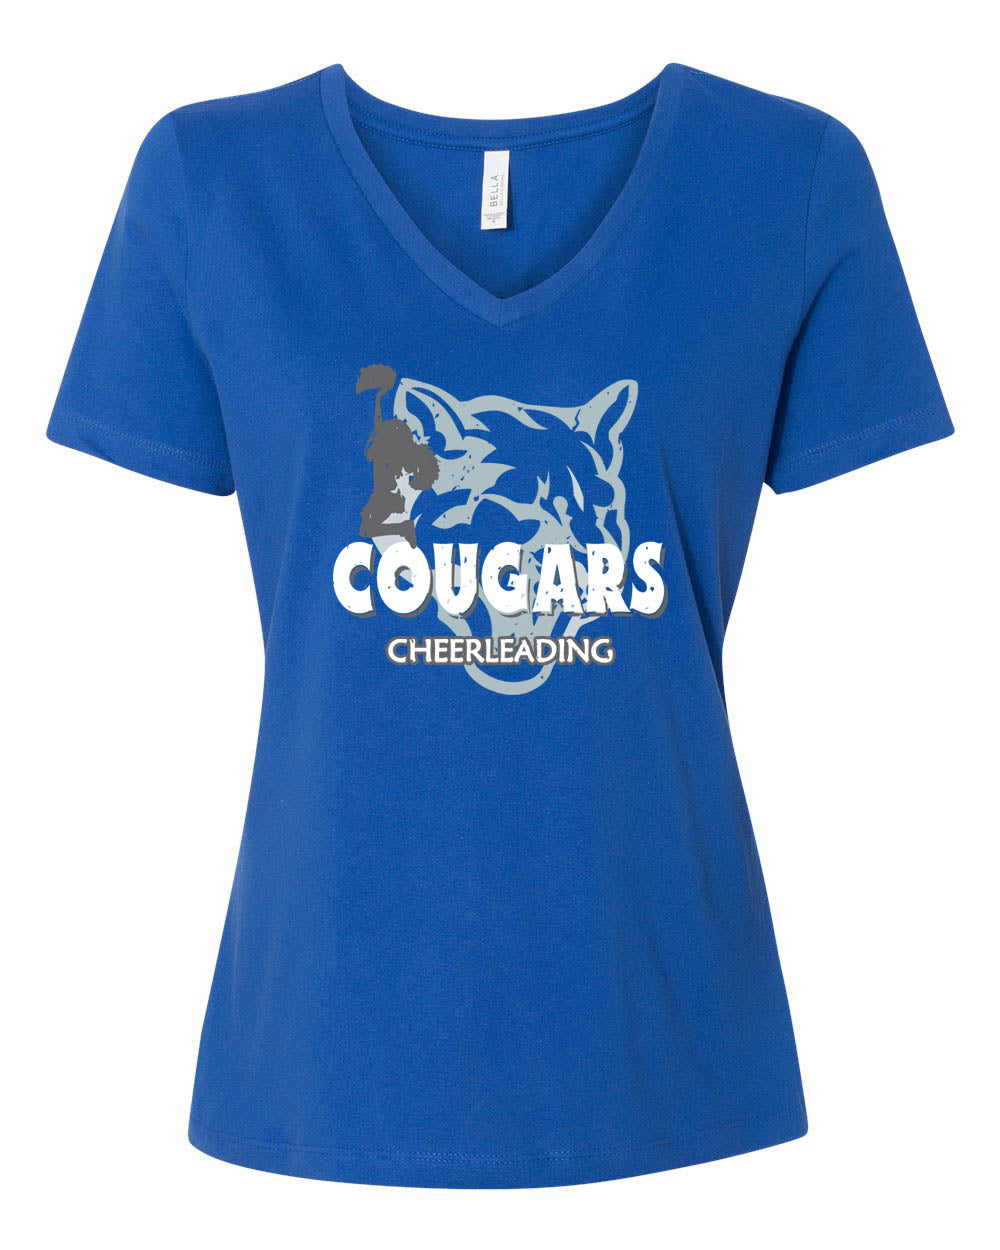 Cougars Cheerleading V-neck T-Shirt